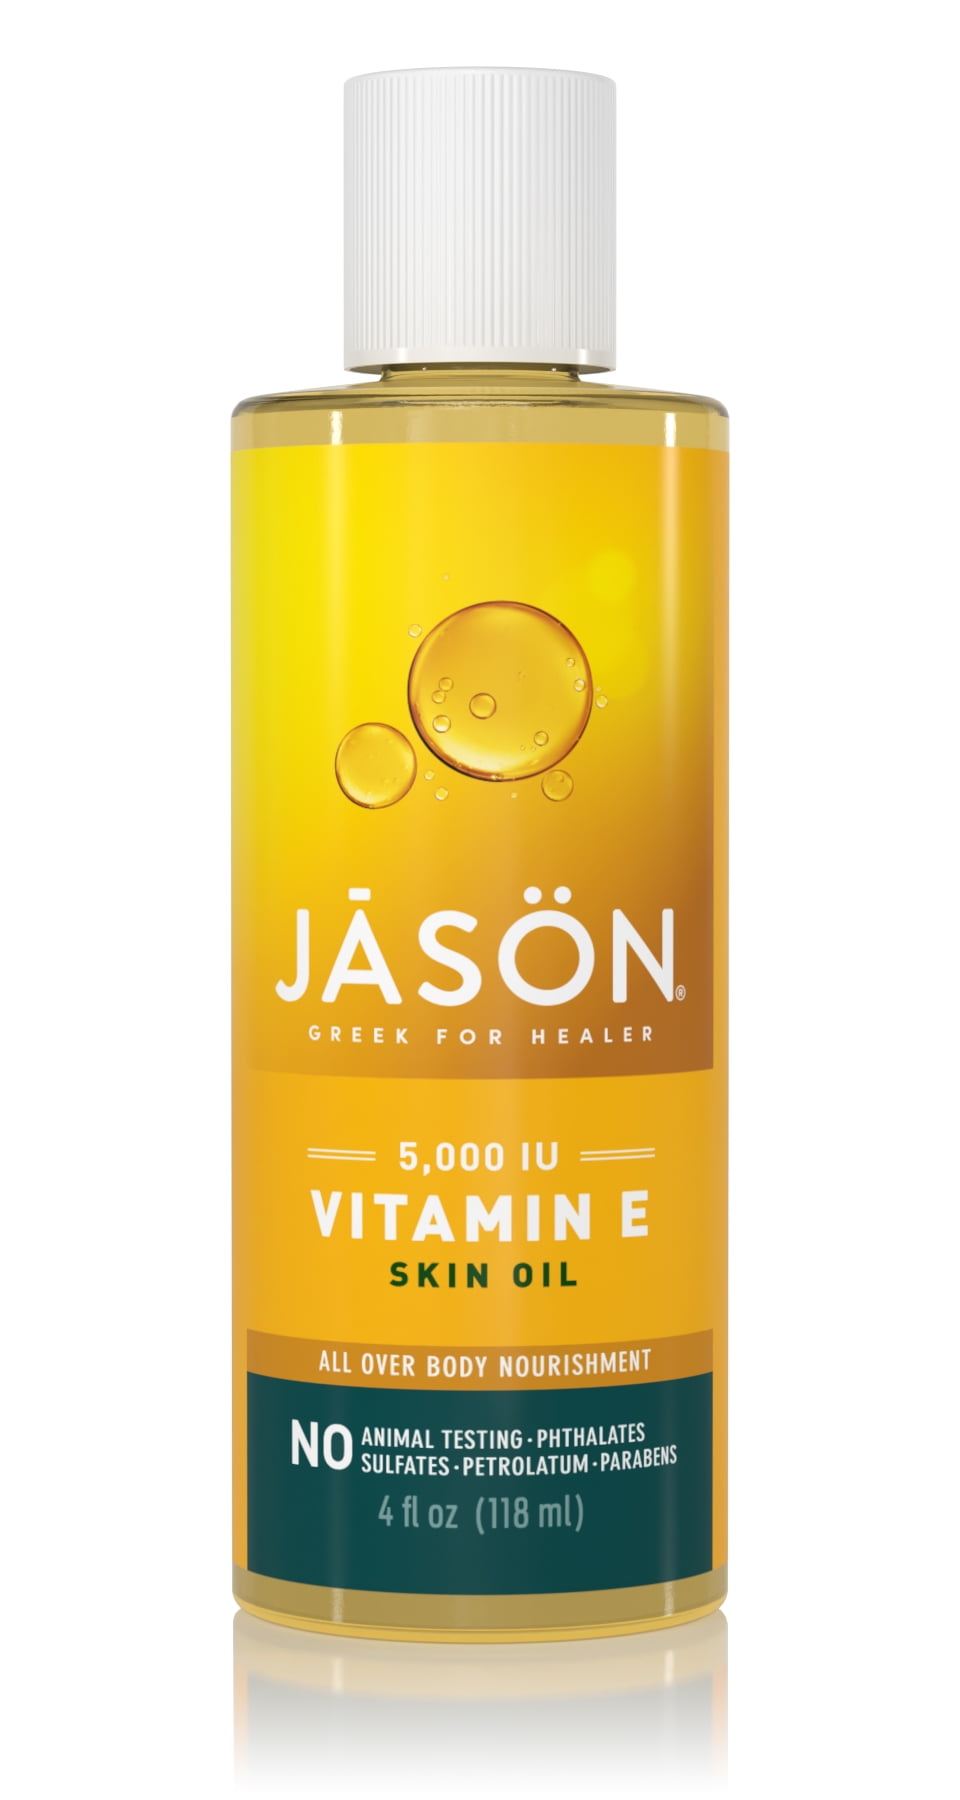 Jason Vitamin E 5,000 IU All Over Body Nourishment Oil, 4 fl oz